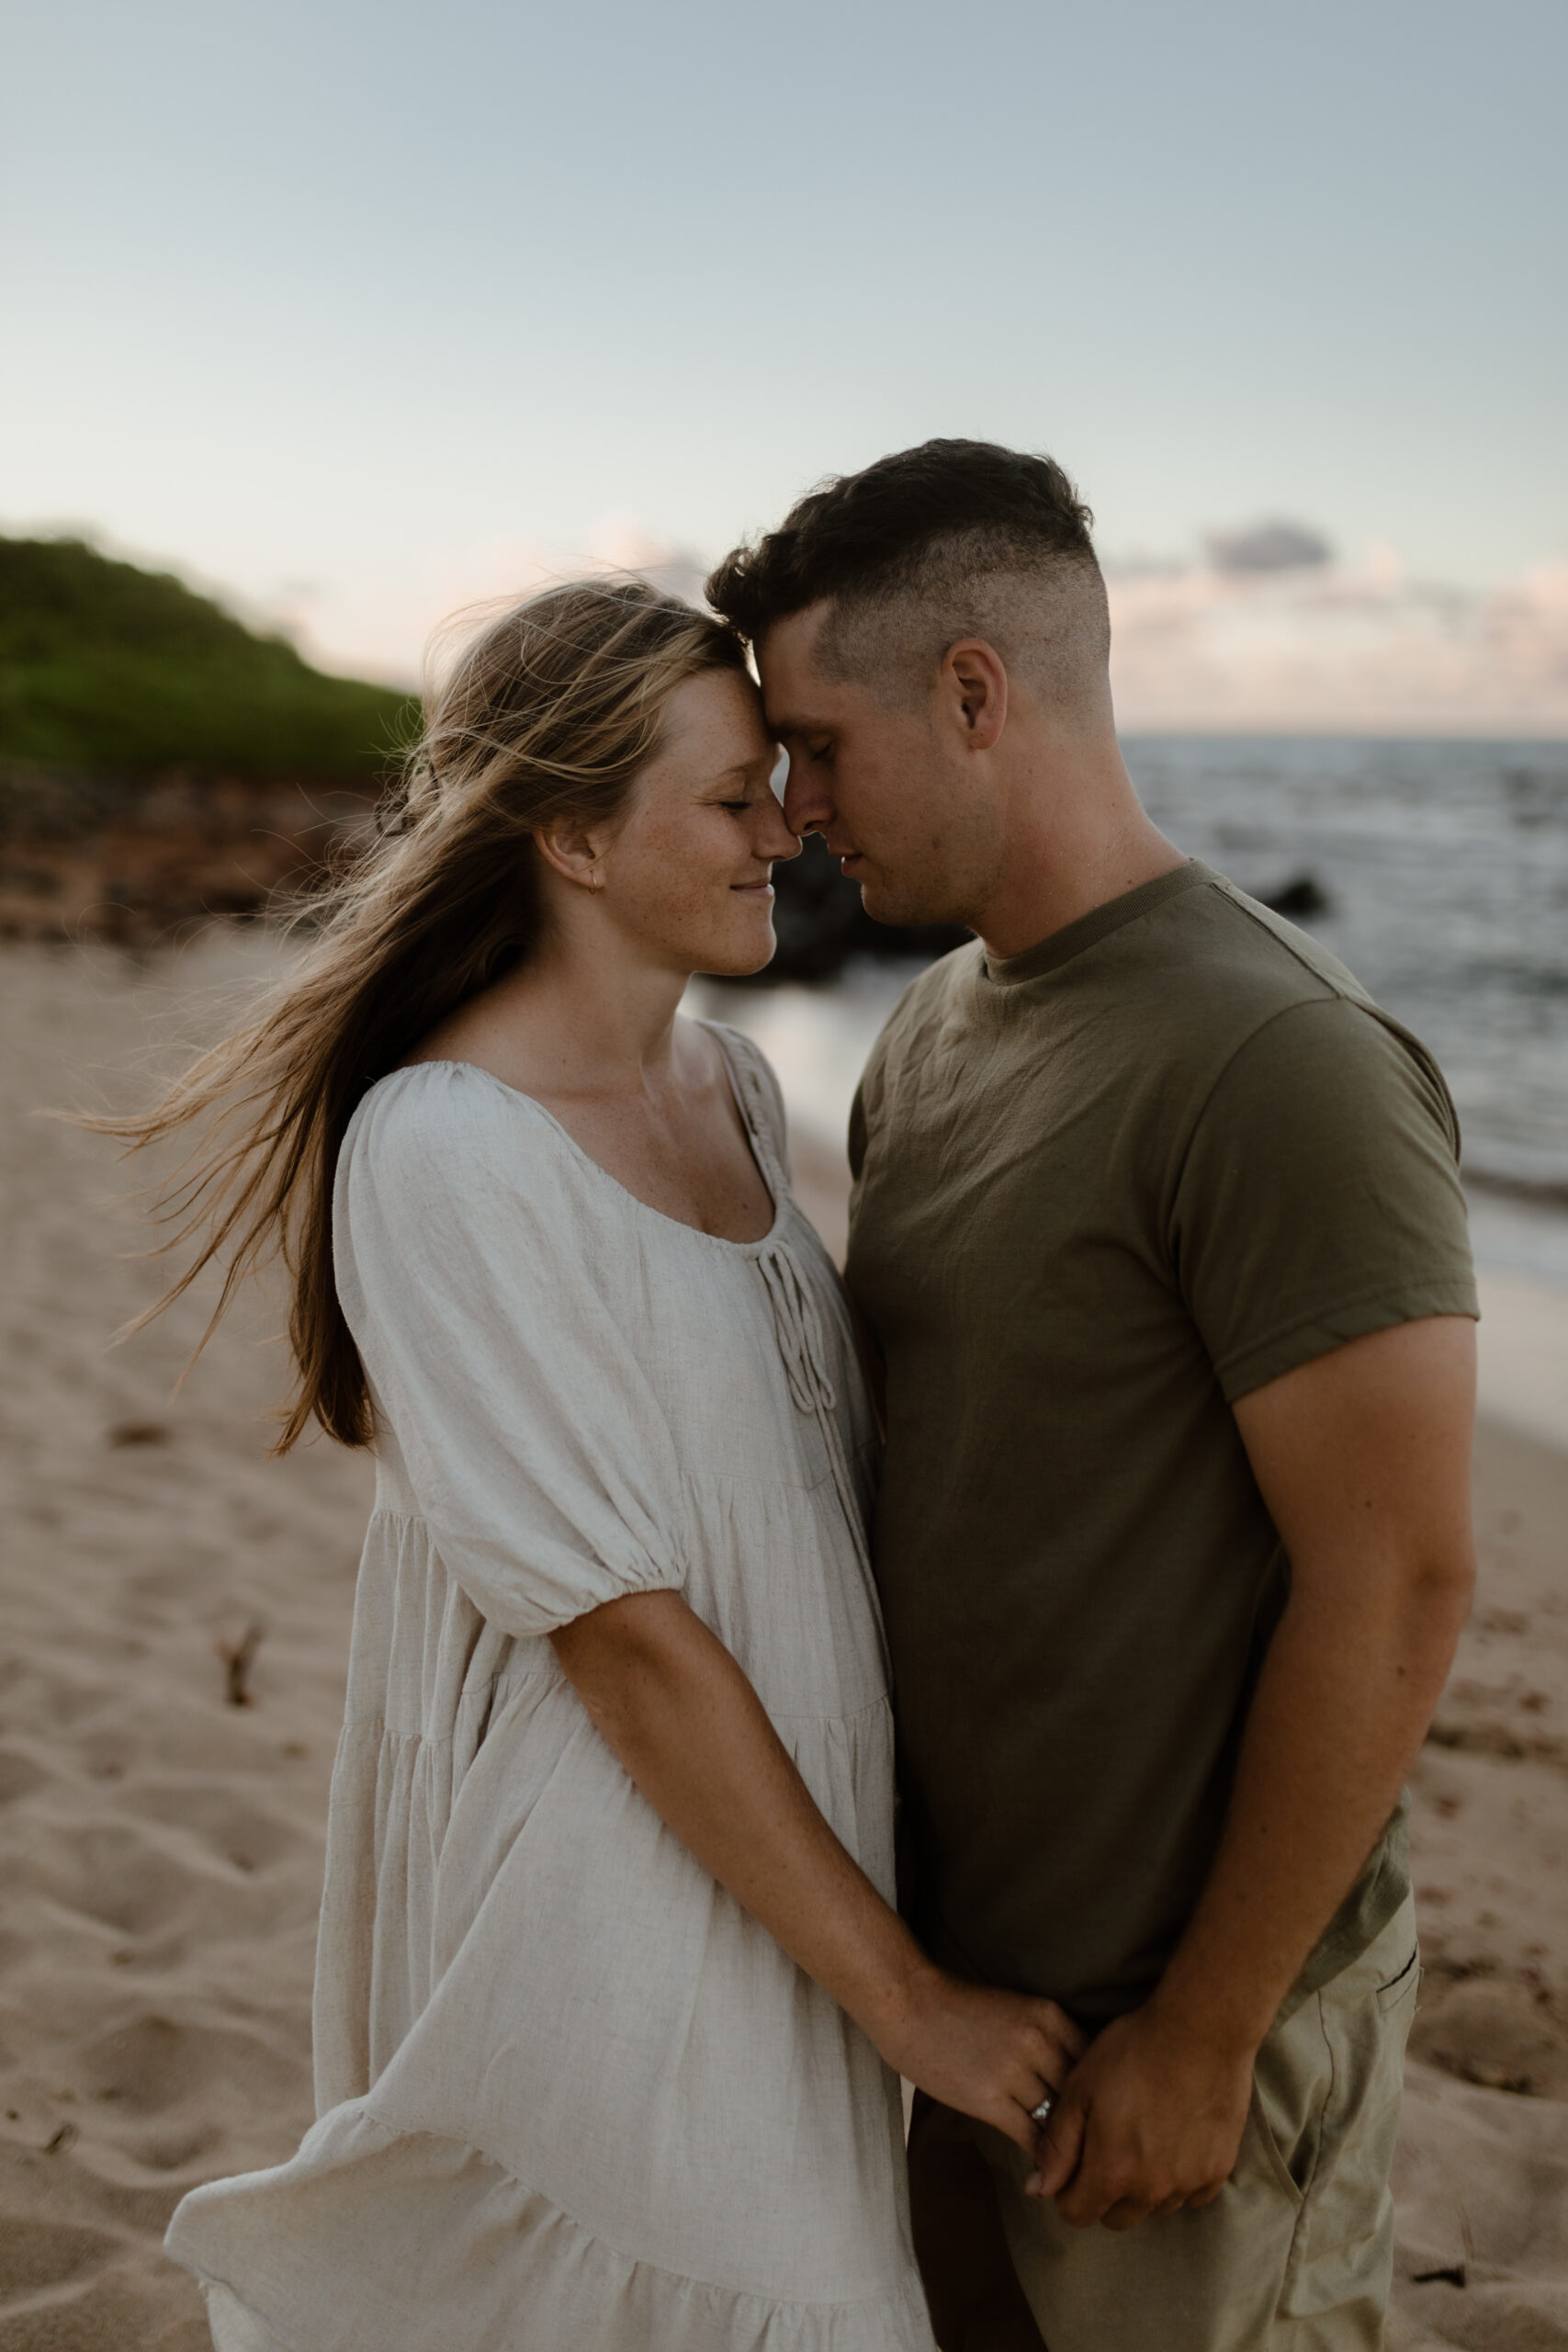 Couple embracing on beach in Maui Hawaii